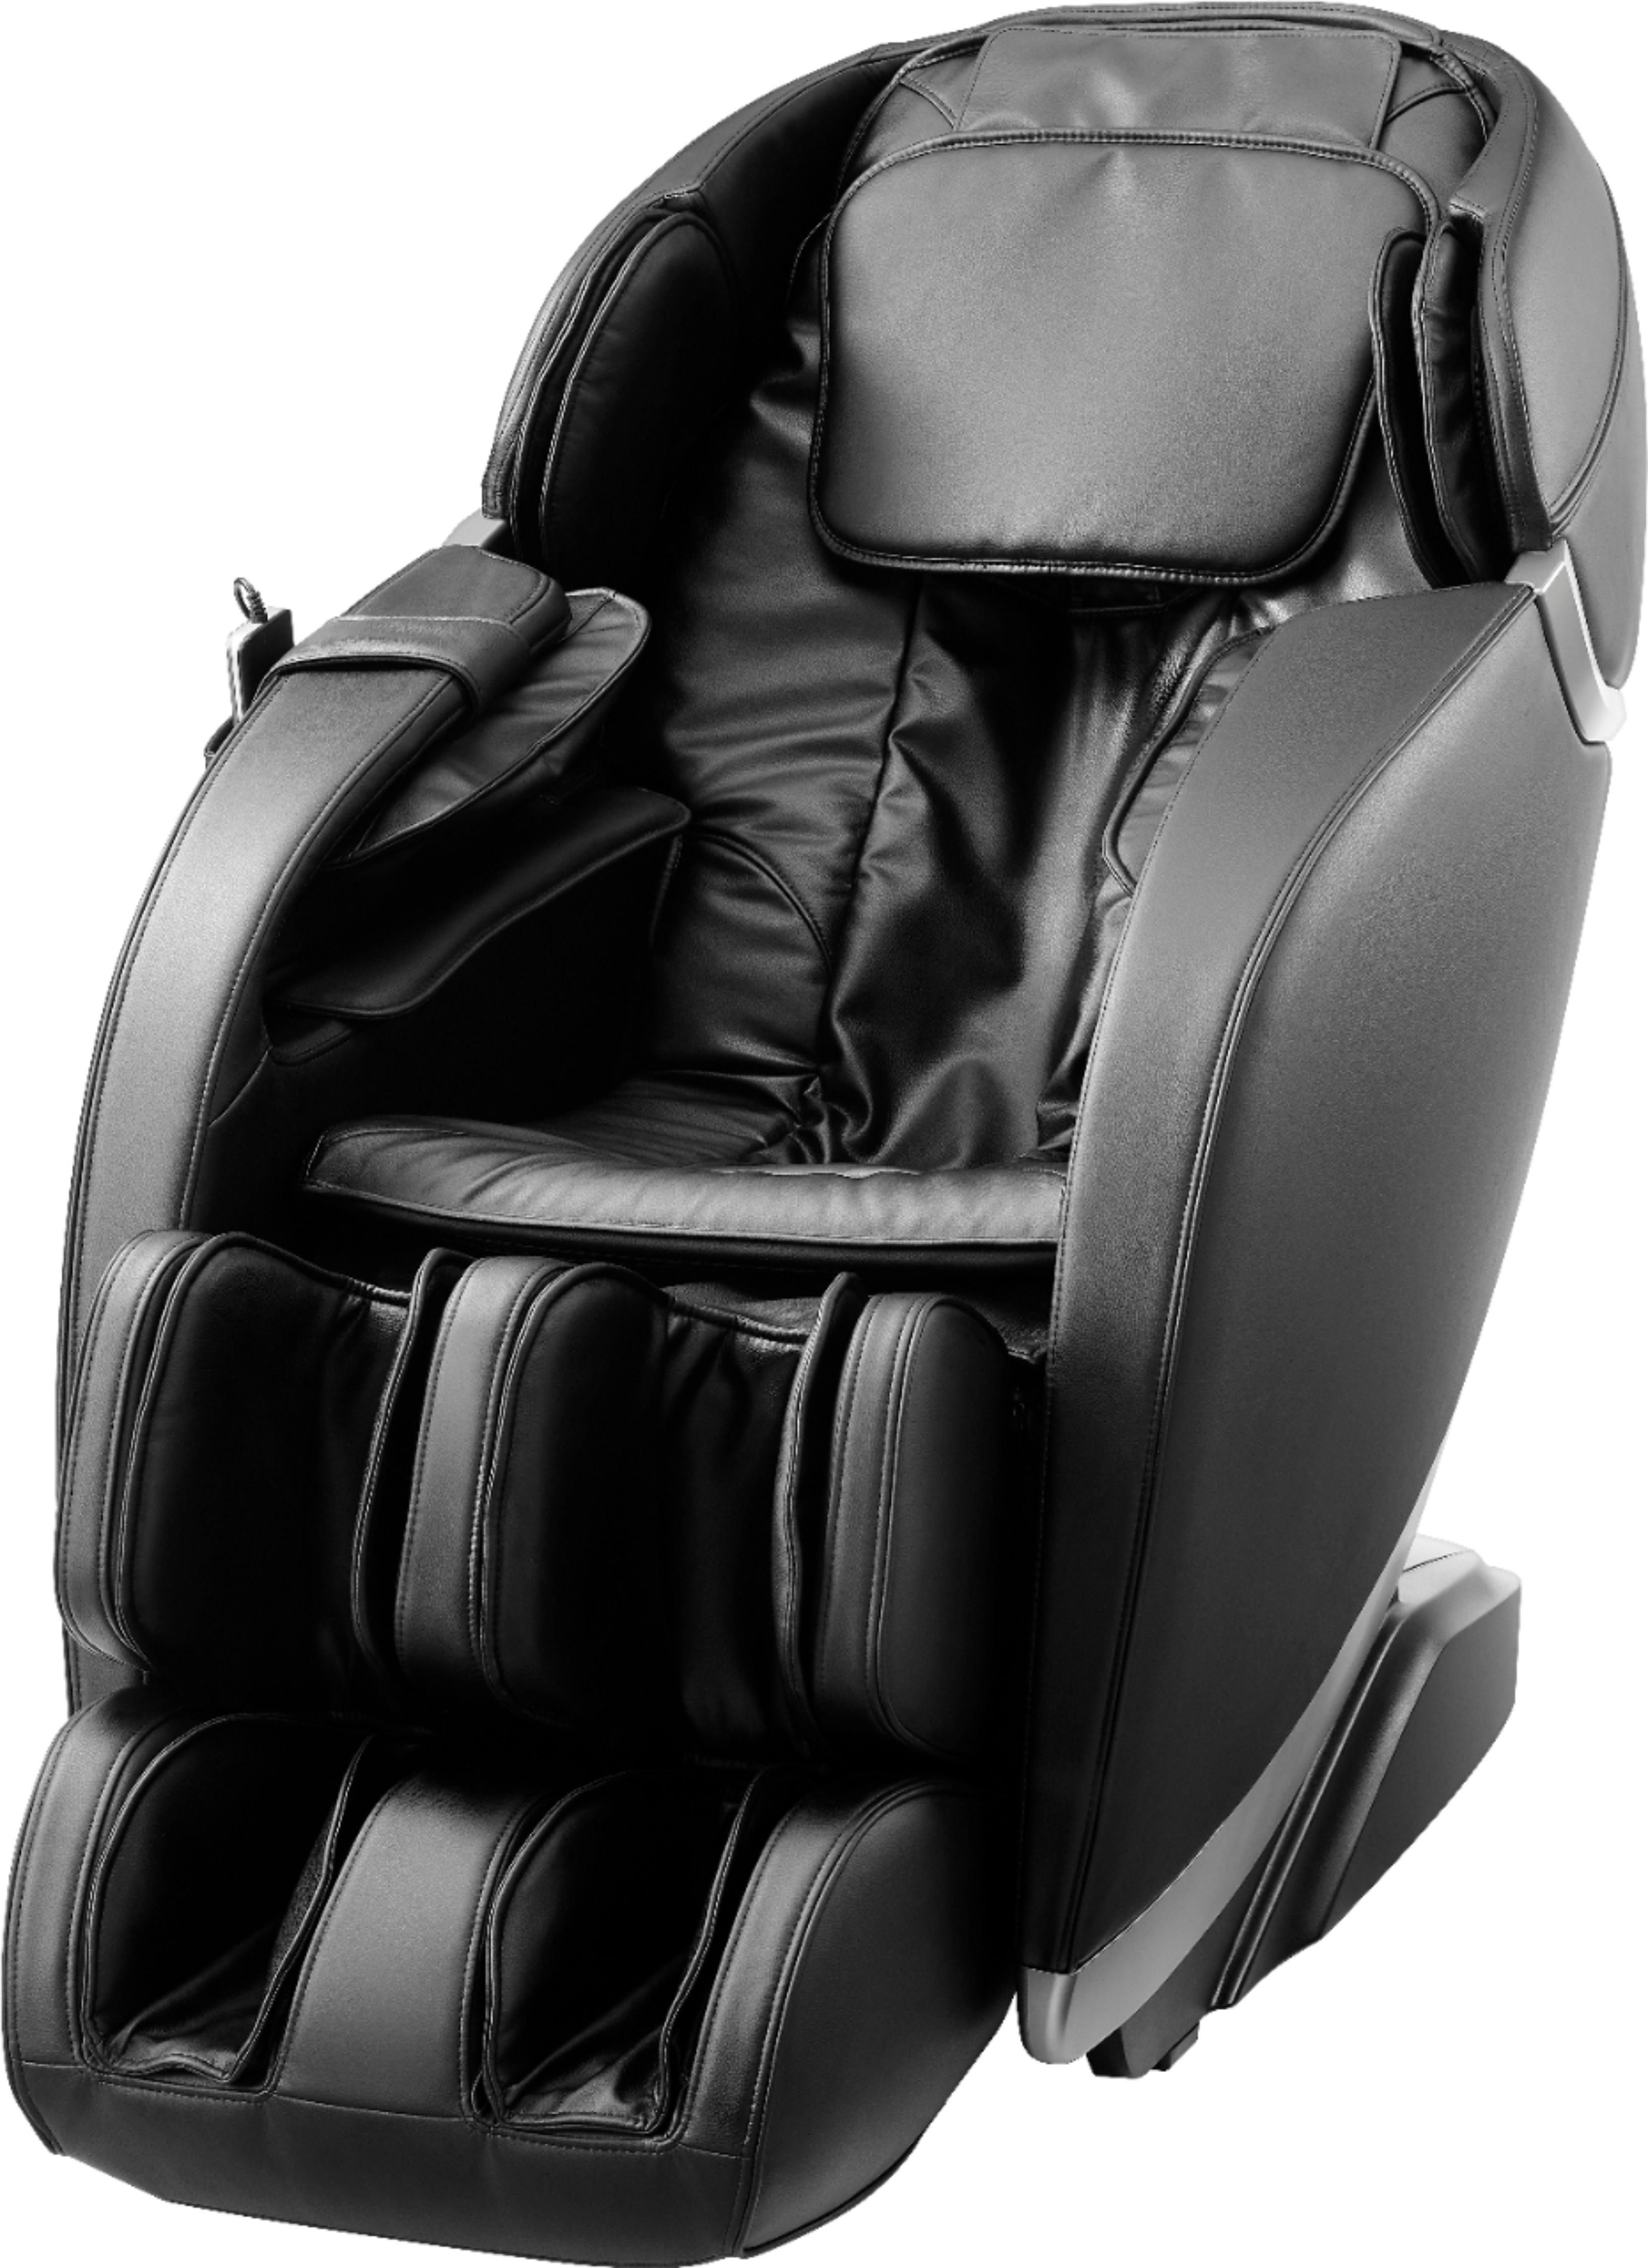 Insignia Zero Gravity Full Body Massage Chair $999.99 + FS